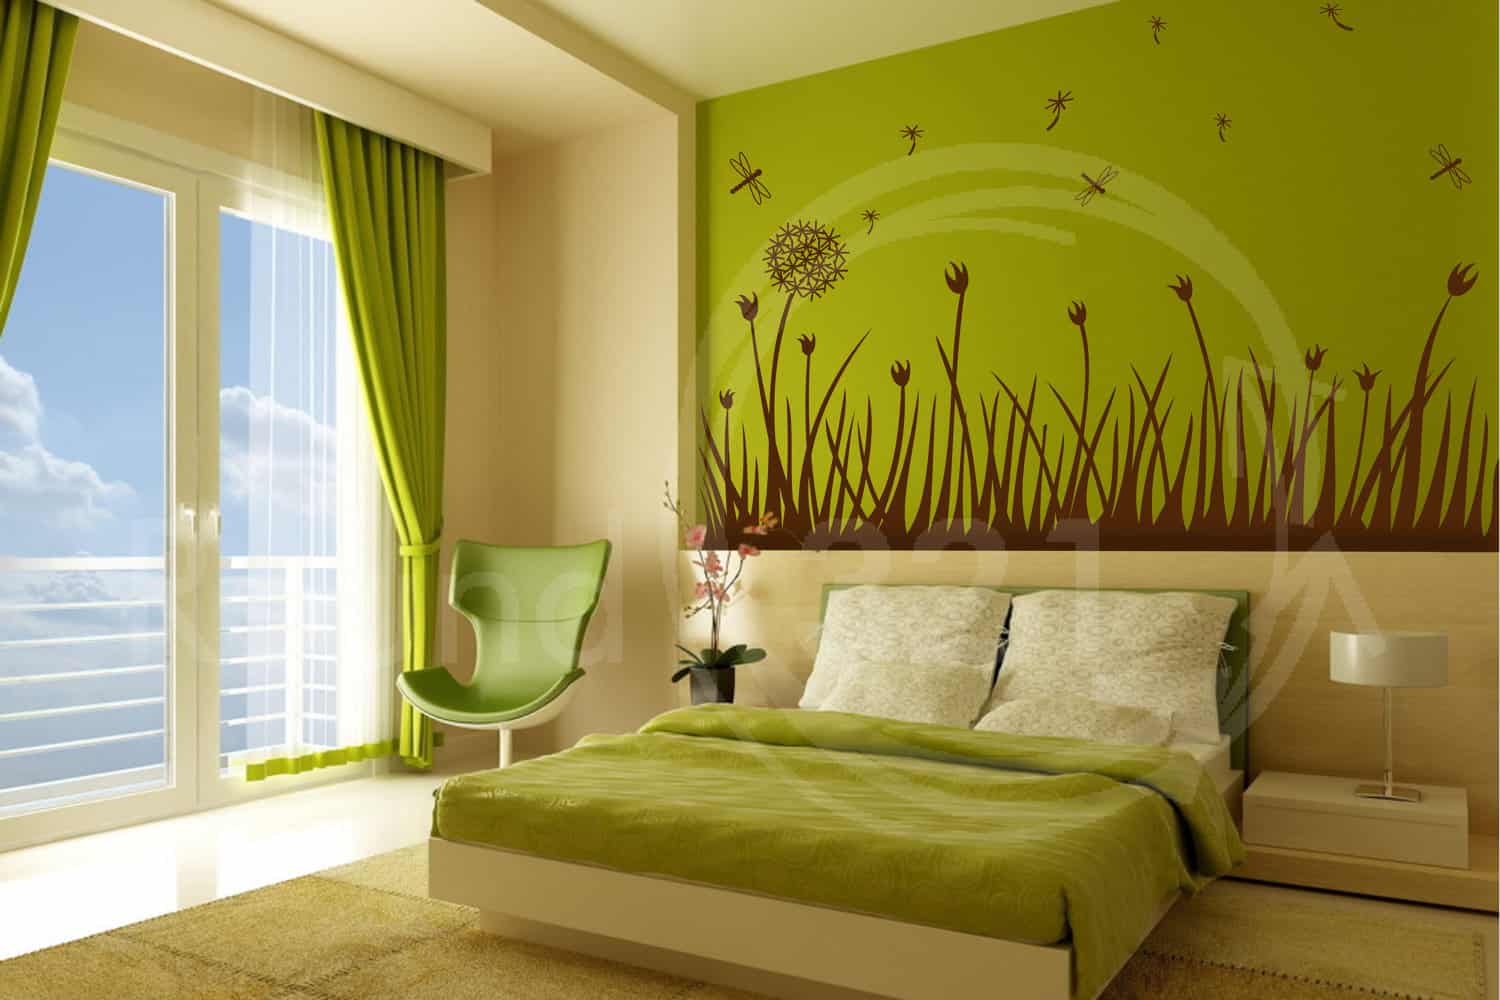 dandelion-decor-green-wall-art.jpg